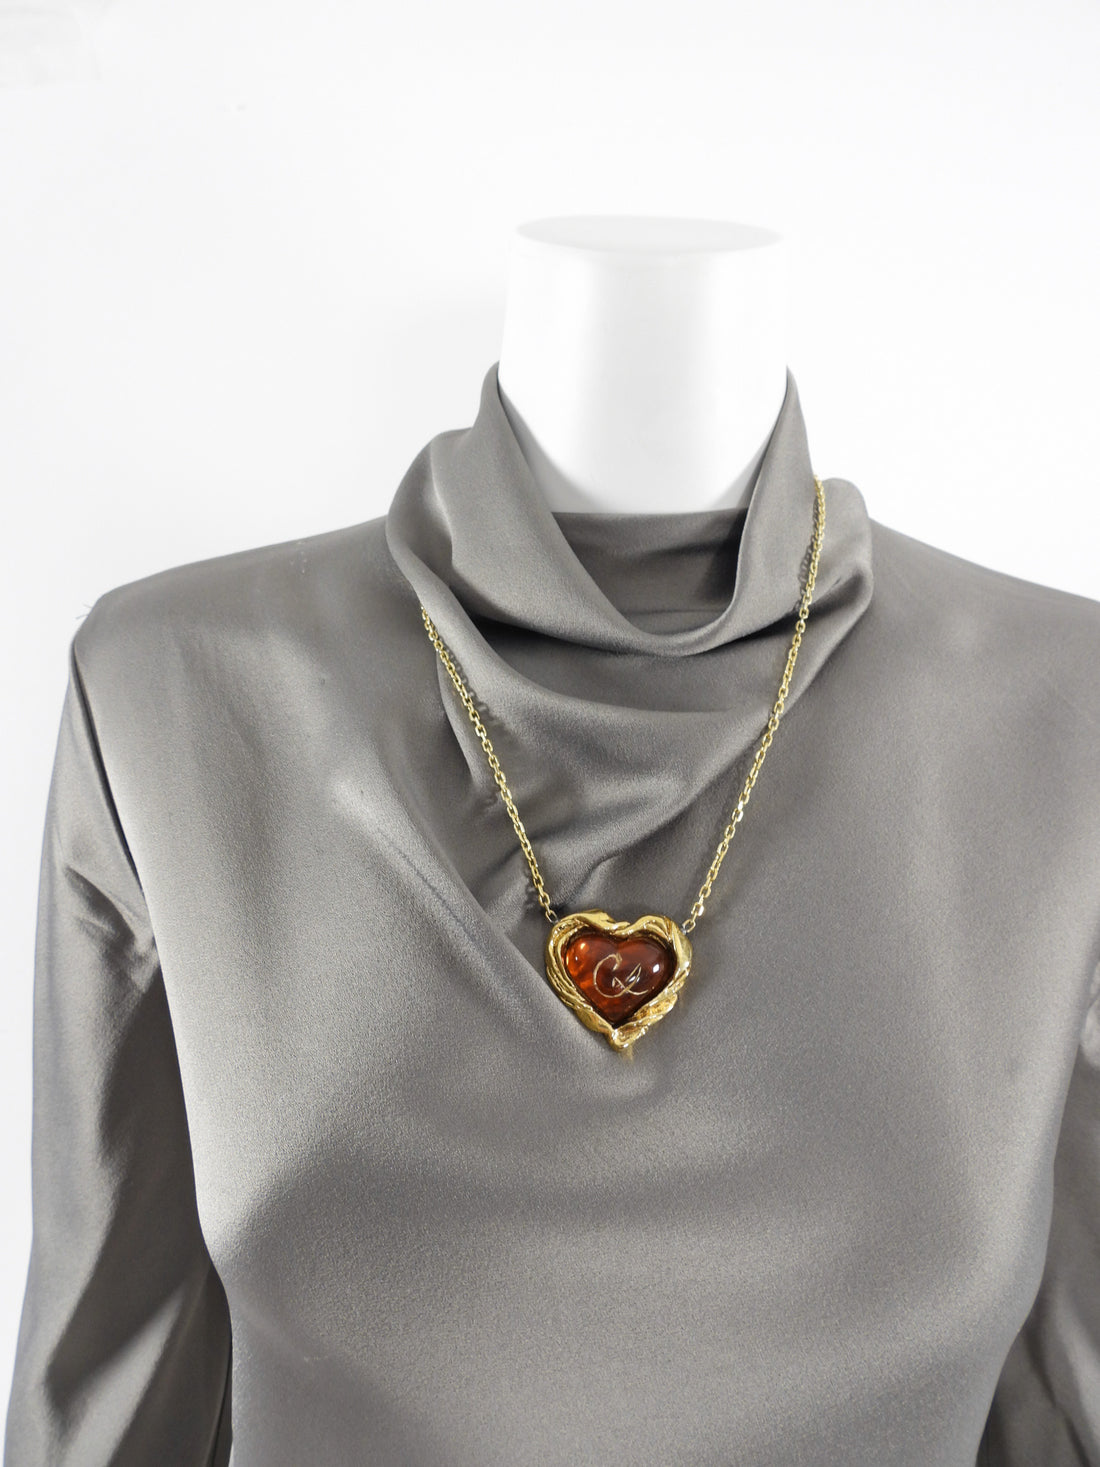 Christian Lacroix Vintage 1990's Resin Heart Necklace